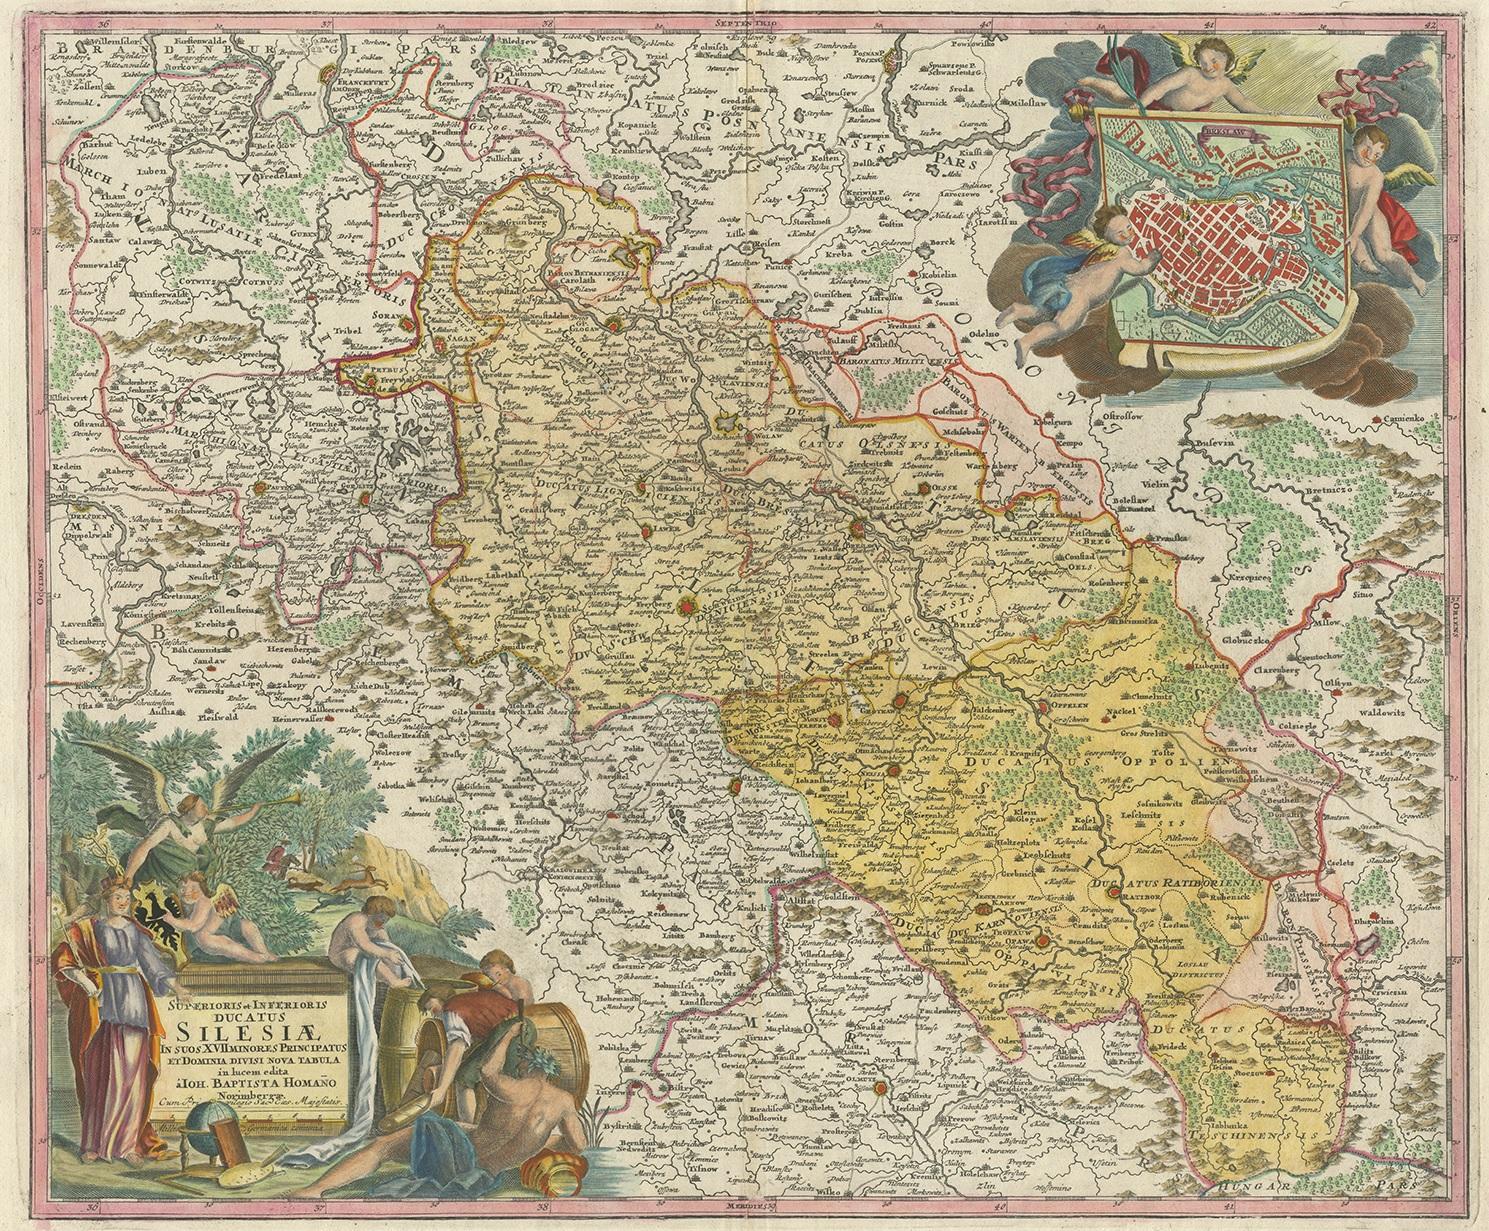 Antique map titled 'Superioris et Inferioris ducatus Silesiae (..)'. 

Detailed map of Silesia by Johann Baptist Homann. Shows the Southwestern part of Poland between Frankfurt Oder in the northwest, over Krosno Odrzanskie, Glogów, Freiberg, Brzeg,